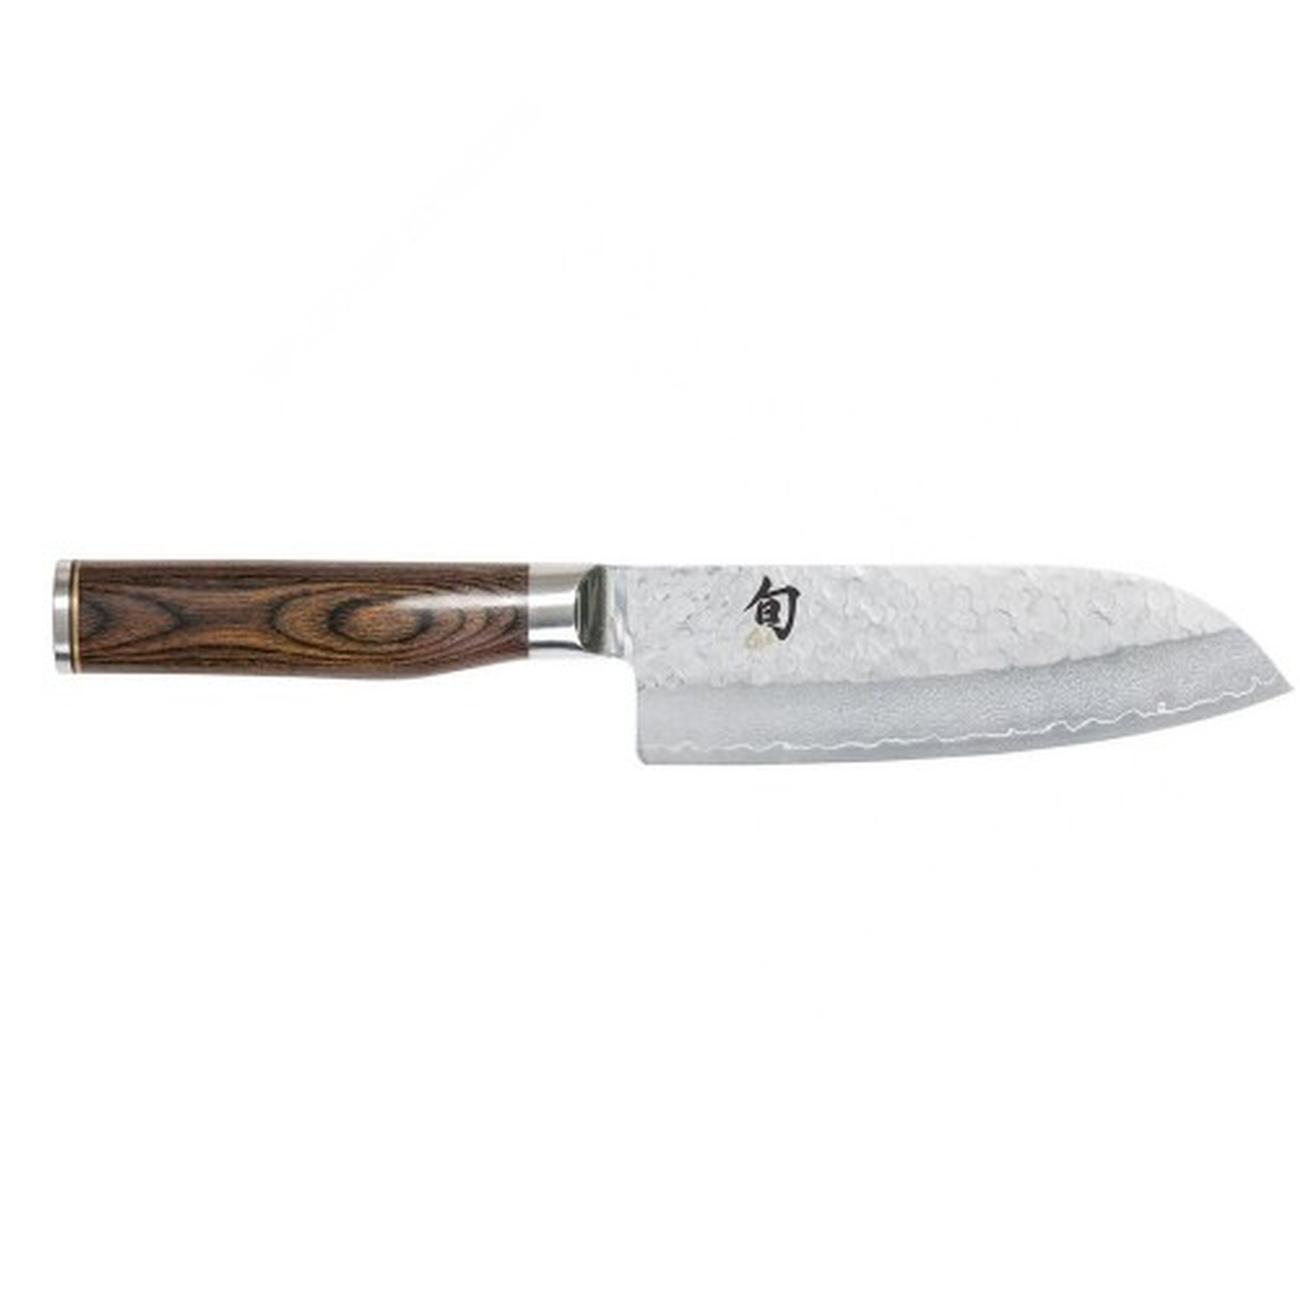 kai-shun-premier-santoku-knife-5-5 - Kai Shun Premier Santoku Knife 5.5 Inch